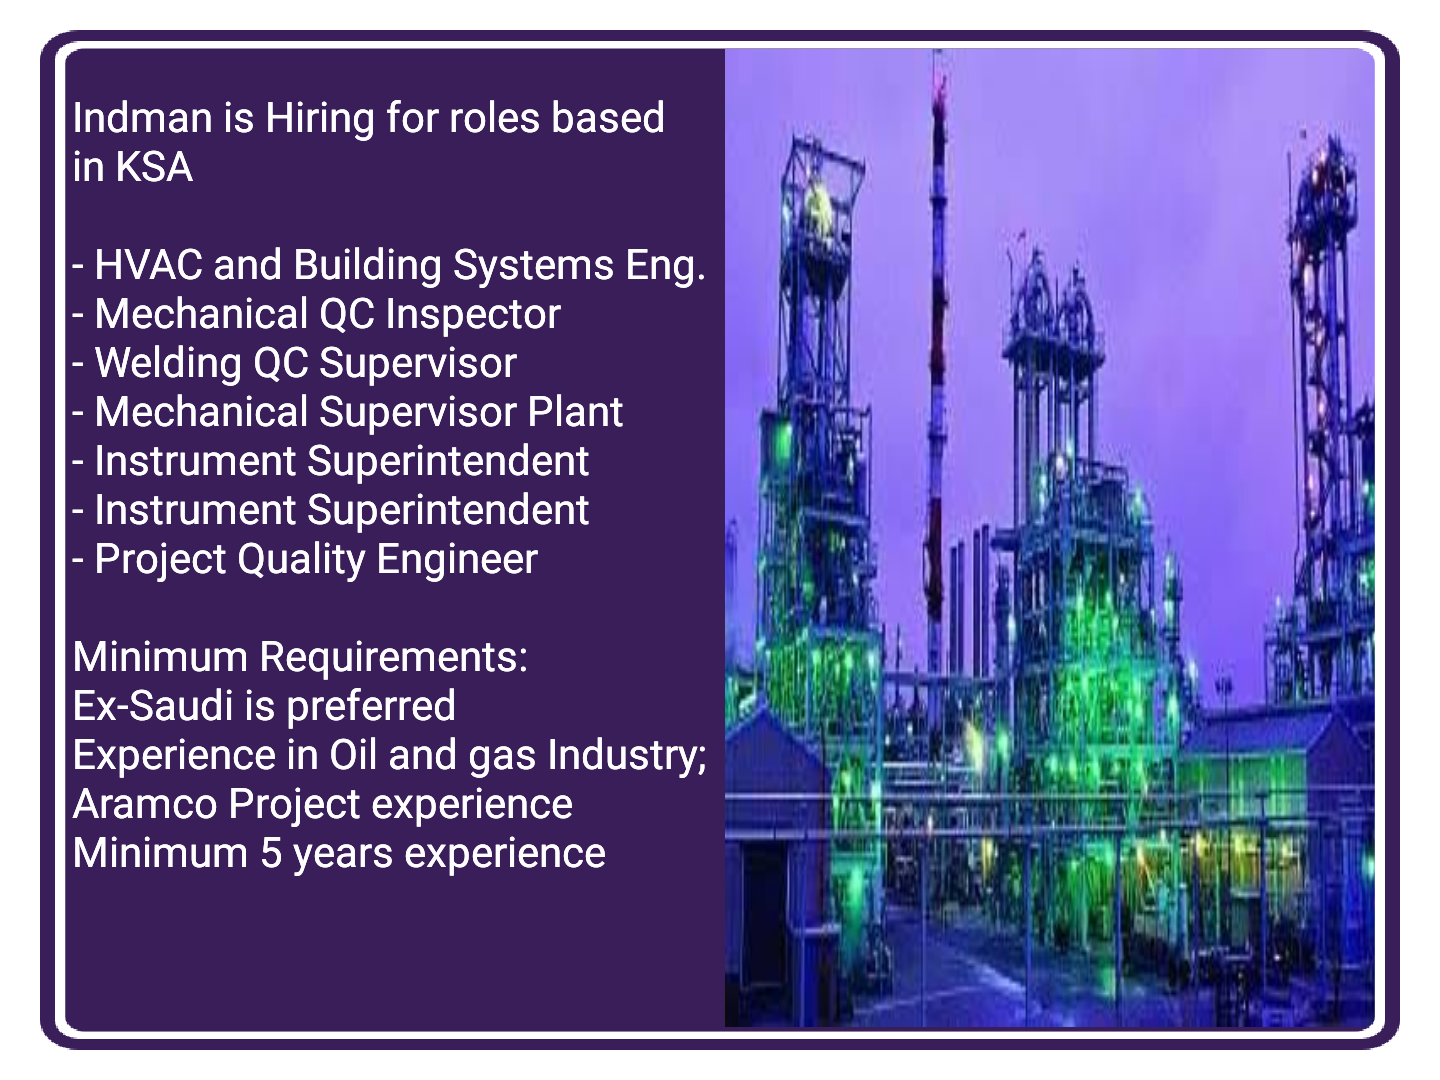 Mechanical, Instrument, Welding & Project Quality Engineer Jobs